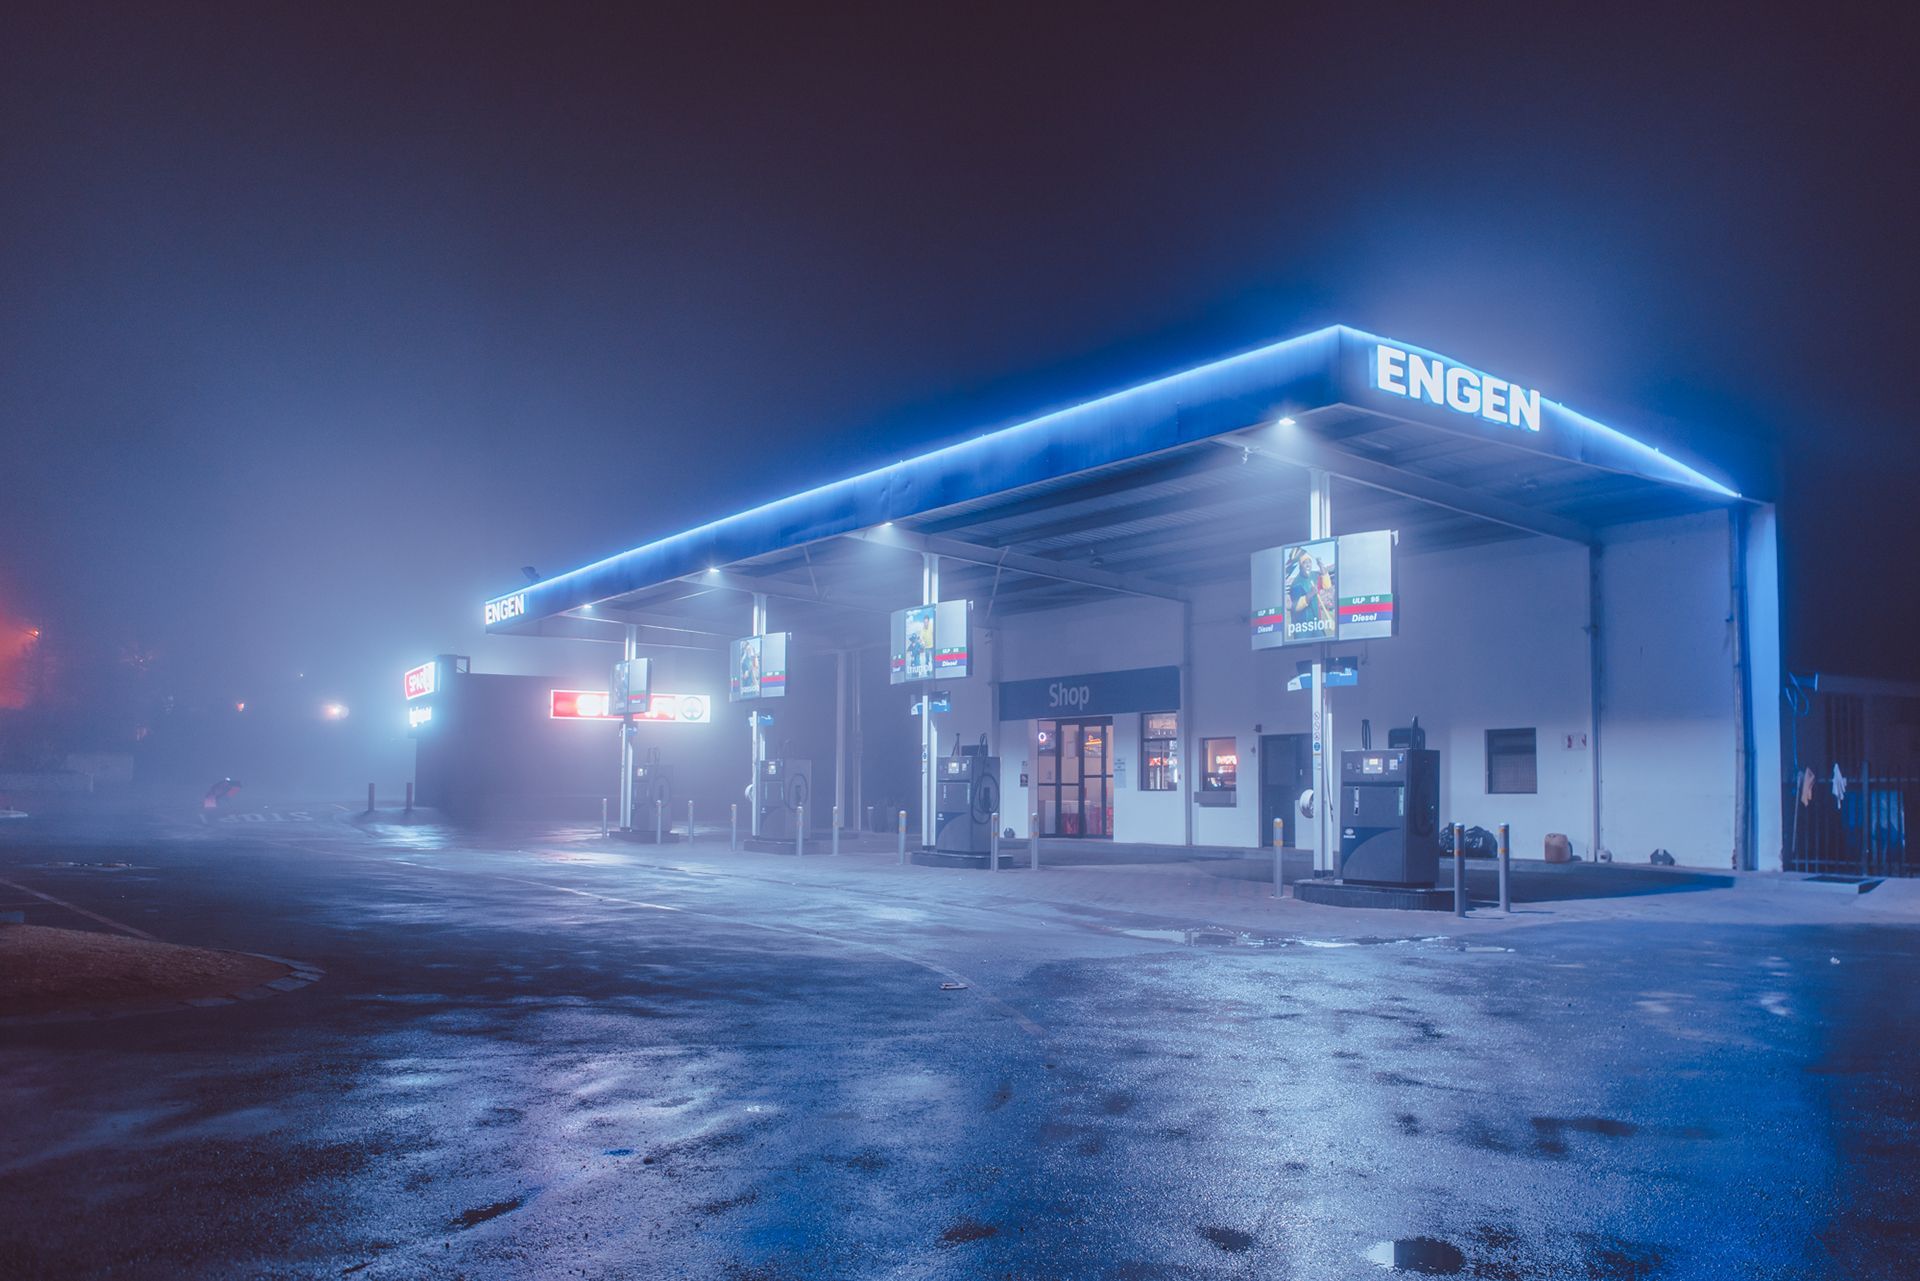 Midnight Stop. Gas station, Desktop background image